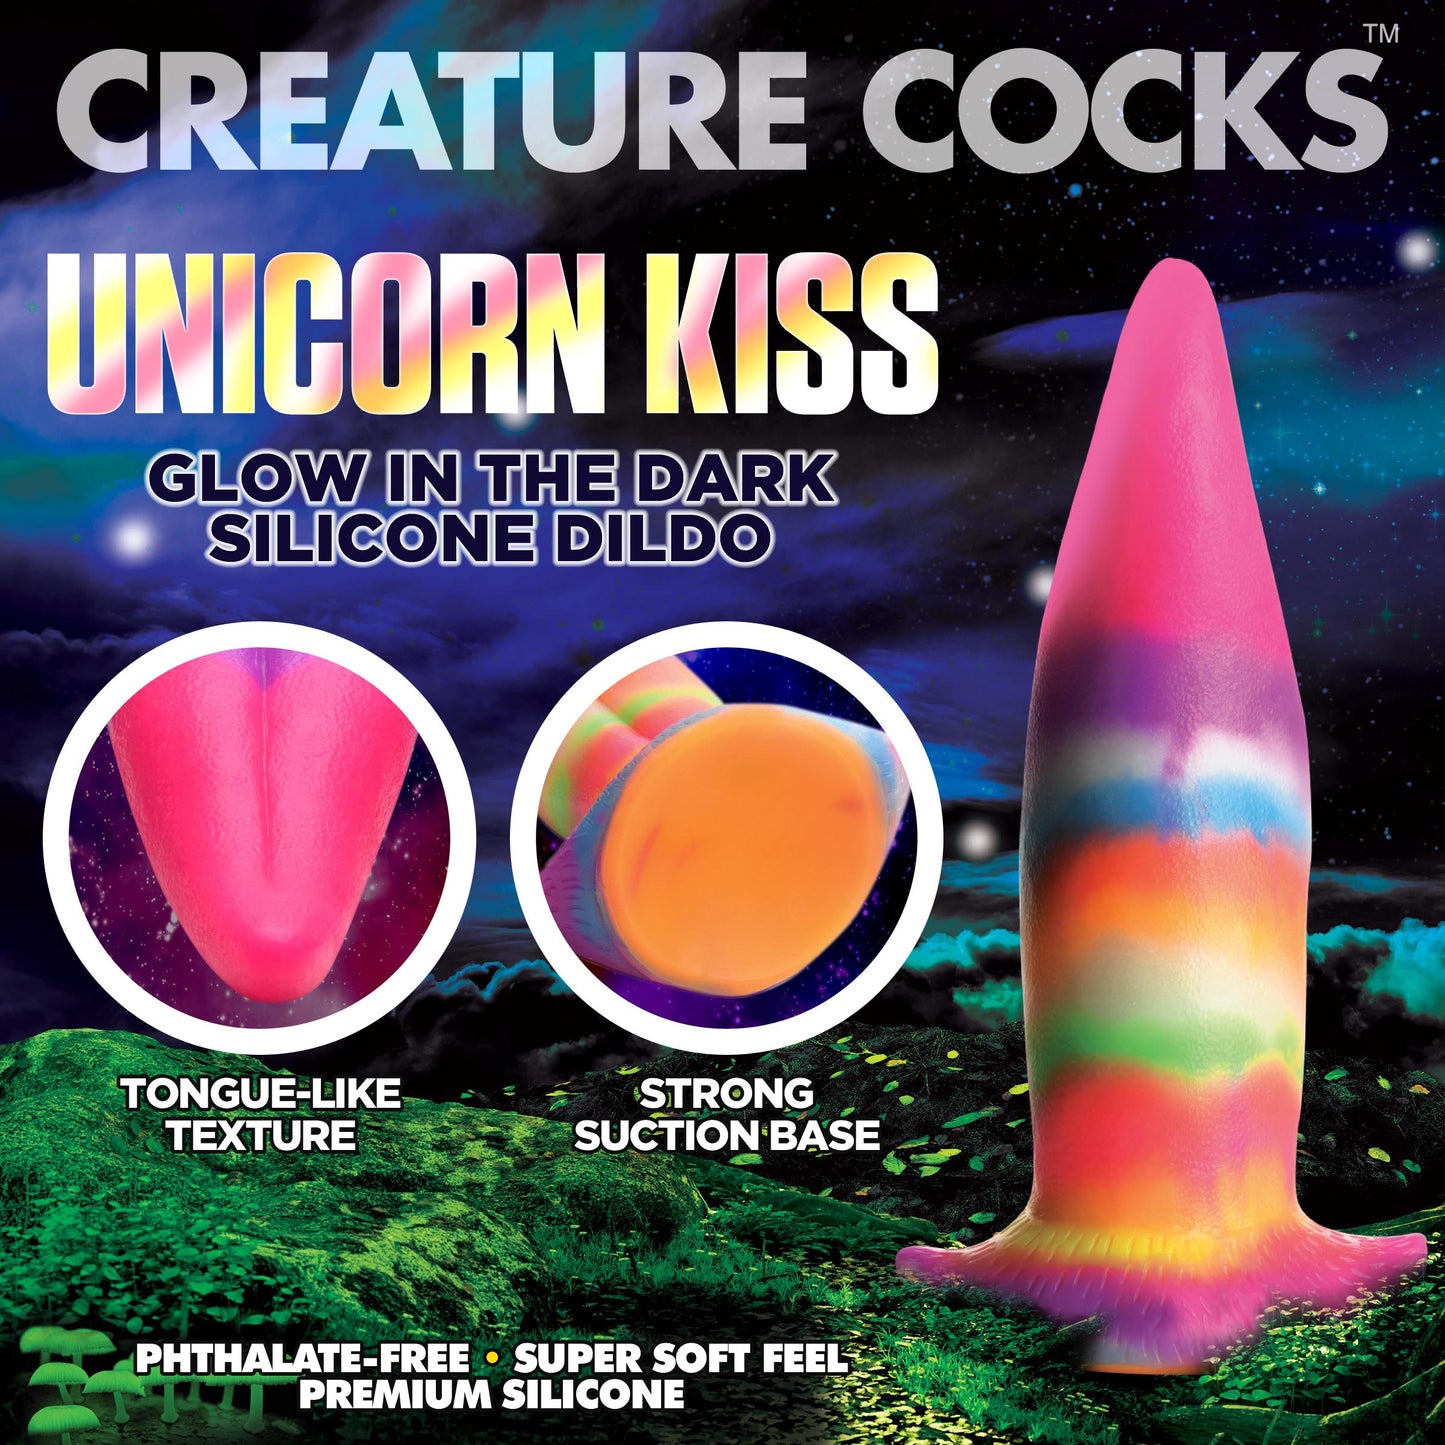 Unicorn Kiss Unicorn Tongue Glow-in-the-Dark Silicone Dildo